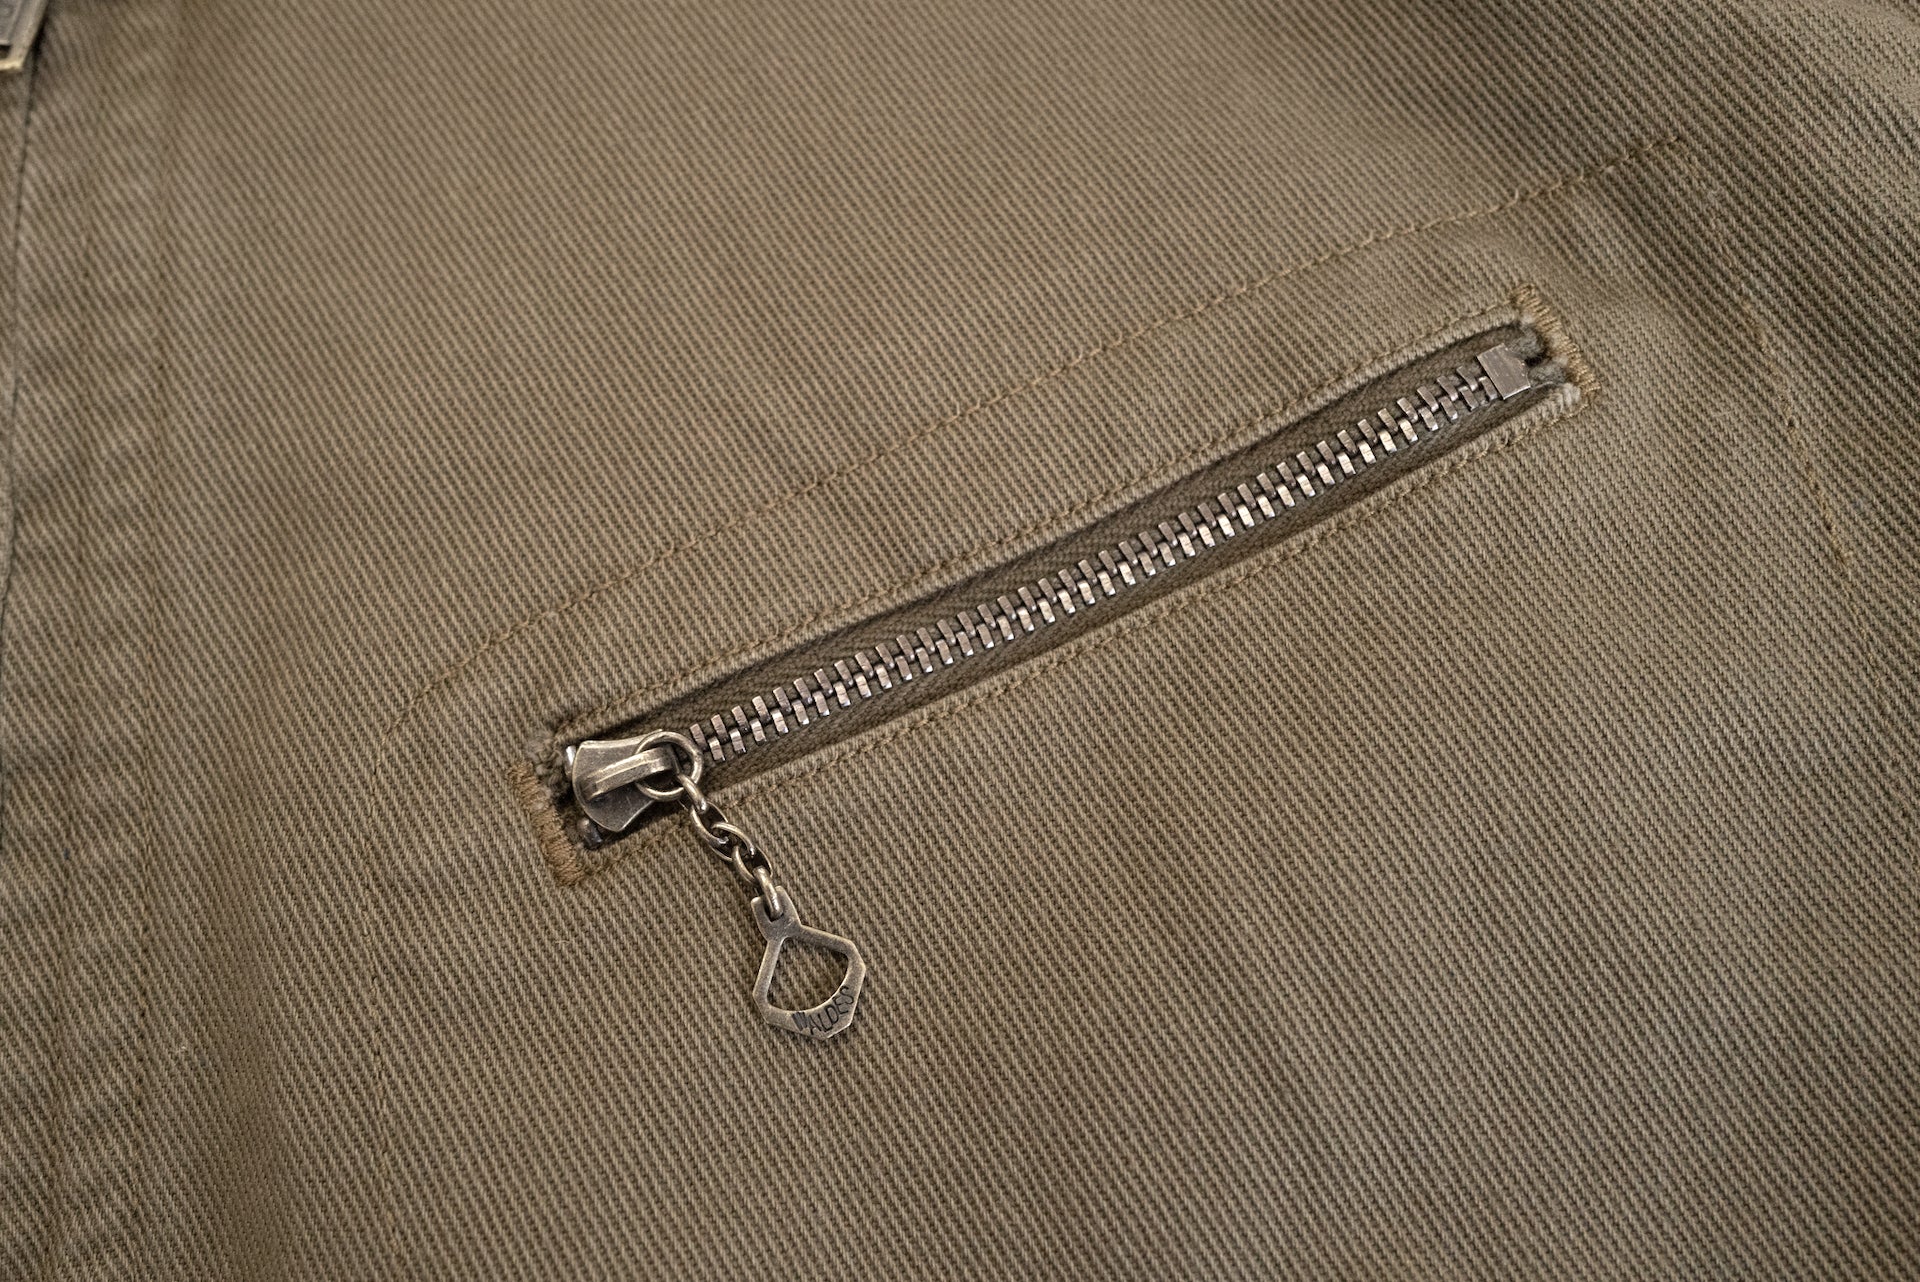 Stevenson Overall Co. 9.5oz Weapon Twill 'Dapper' Work Jacket (Khaki Beige)